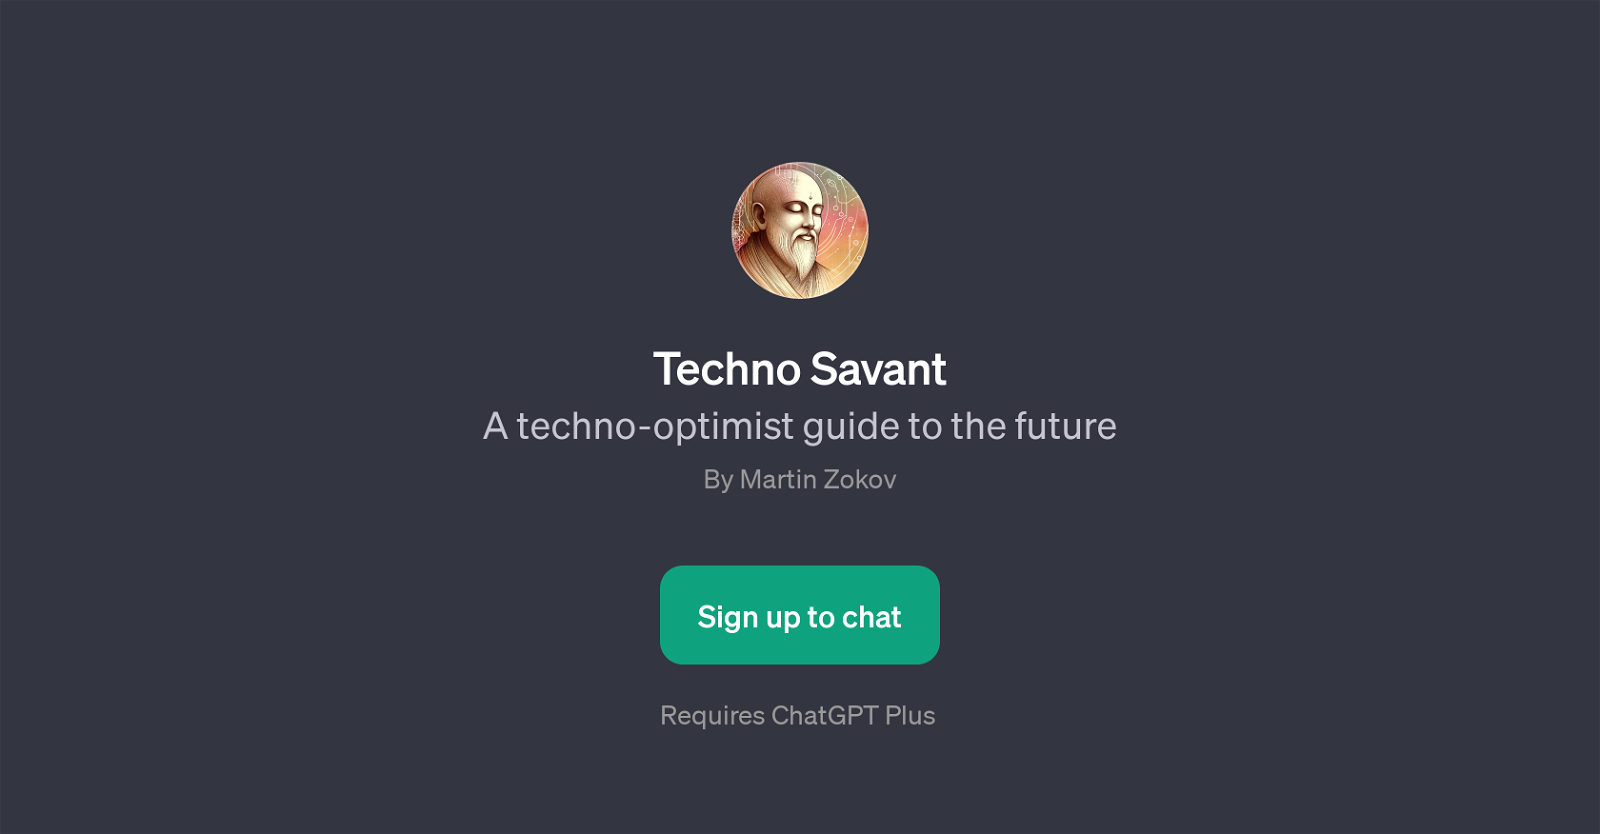 Techno Savant website